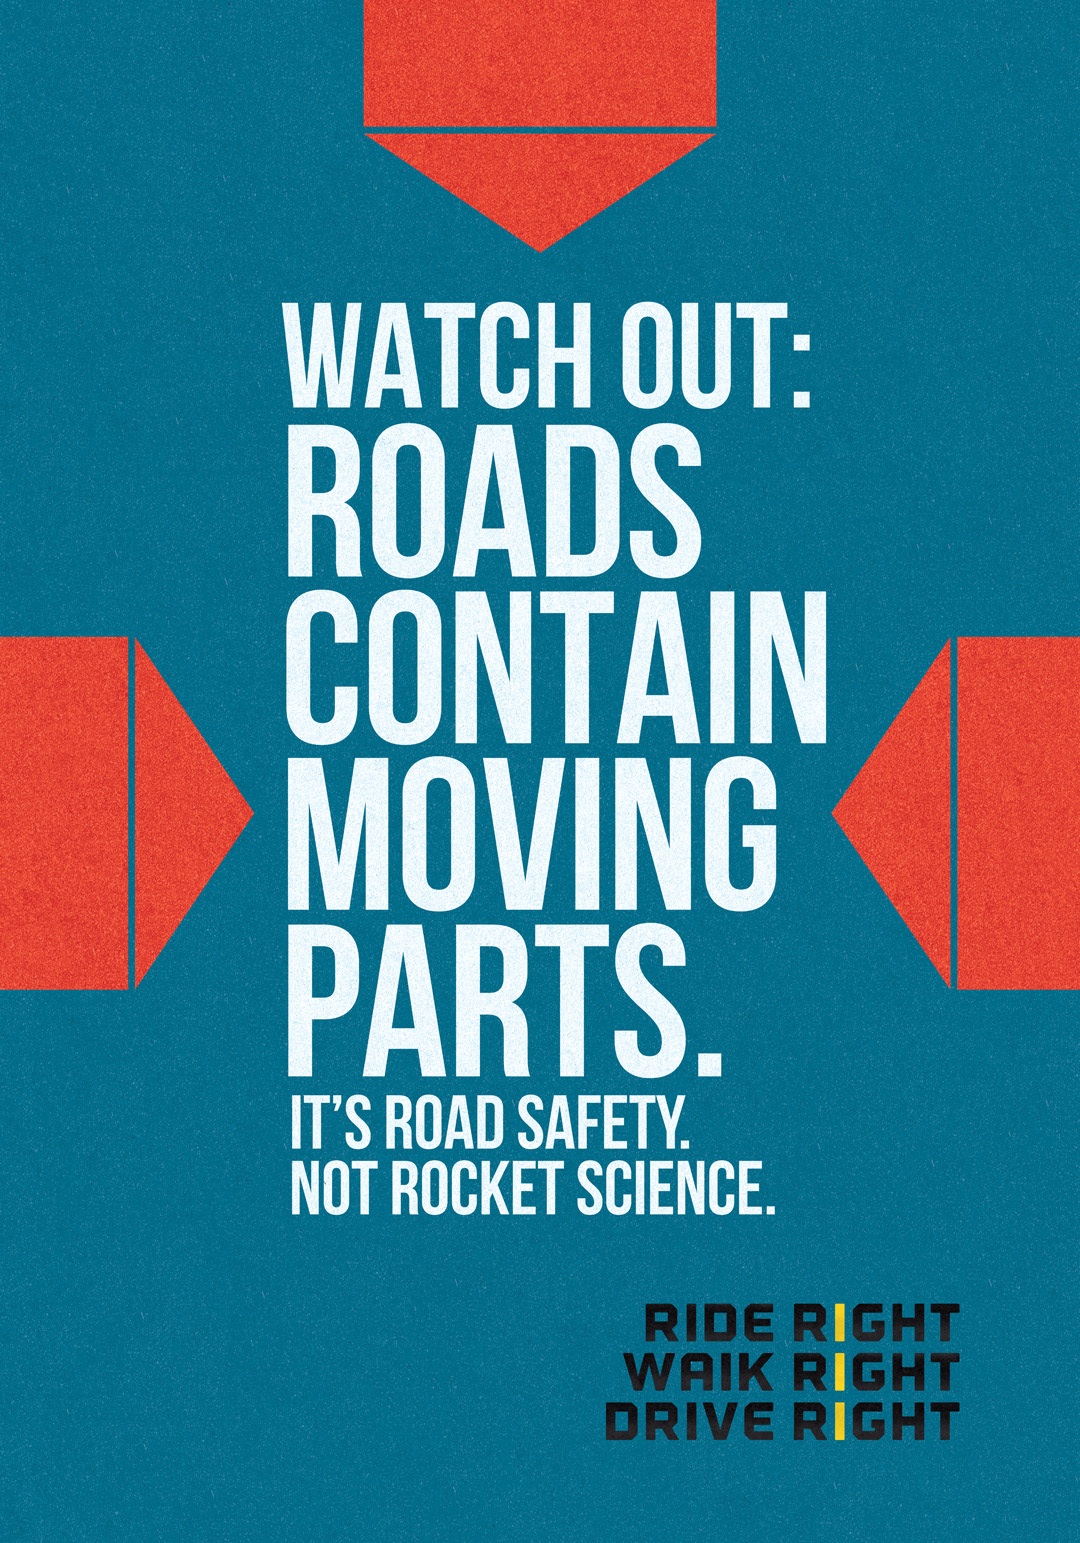 MOTU's PSAs remind, It's road safety. Not rocket science. Photo courtesy of MOTU